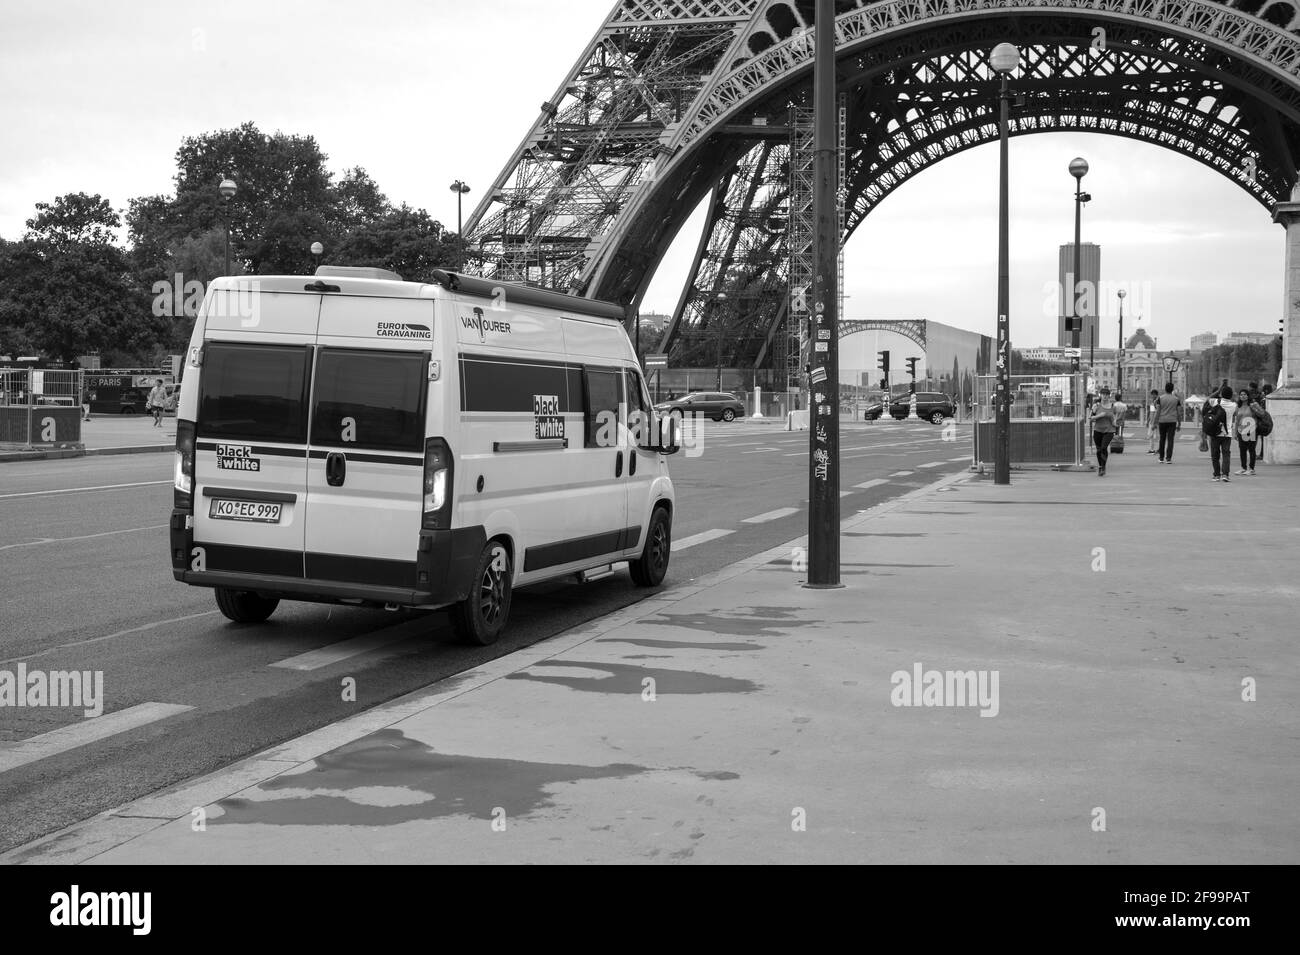 Wohnmobil / Van „Vantourer Black and White“ vor dem Eiffelturm, Paris, Frankreich Stockfoto